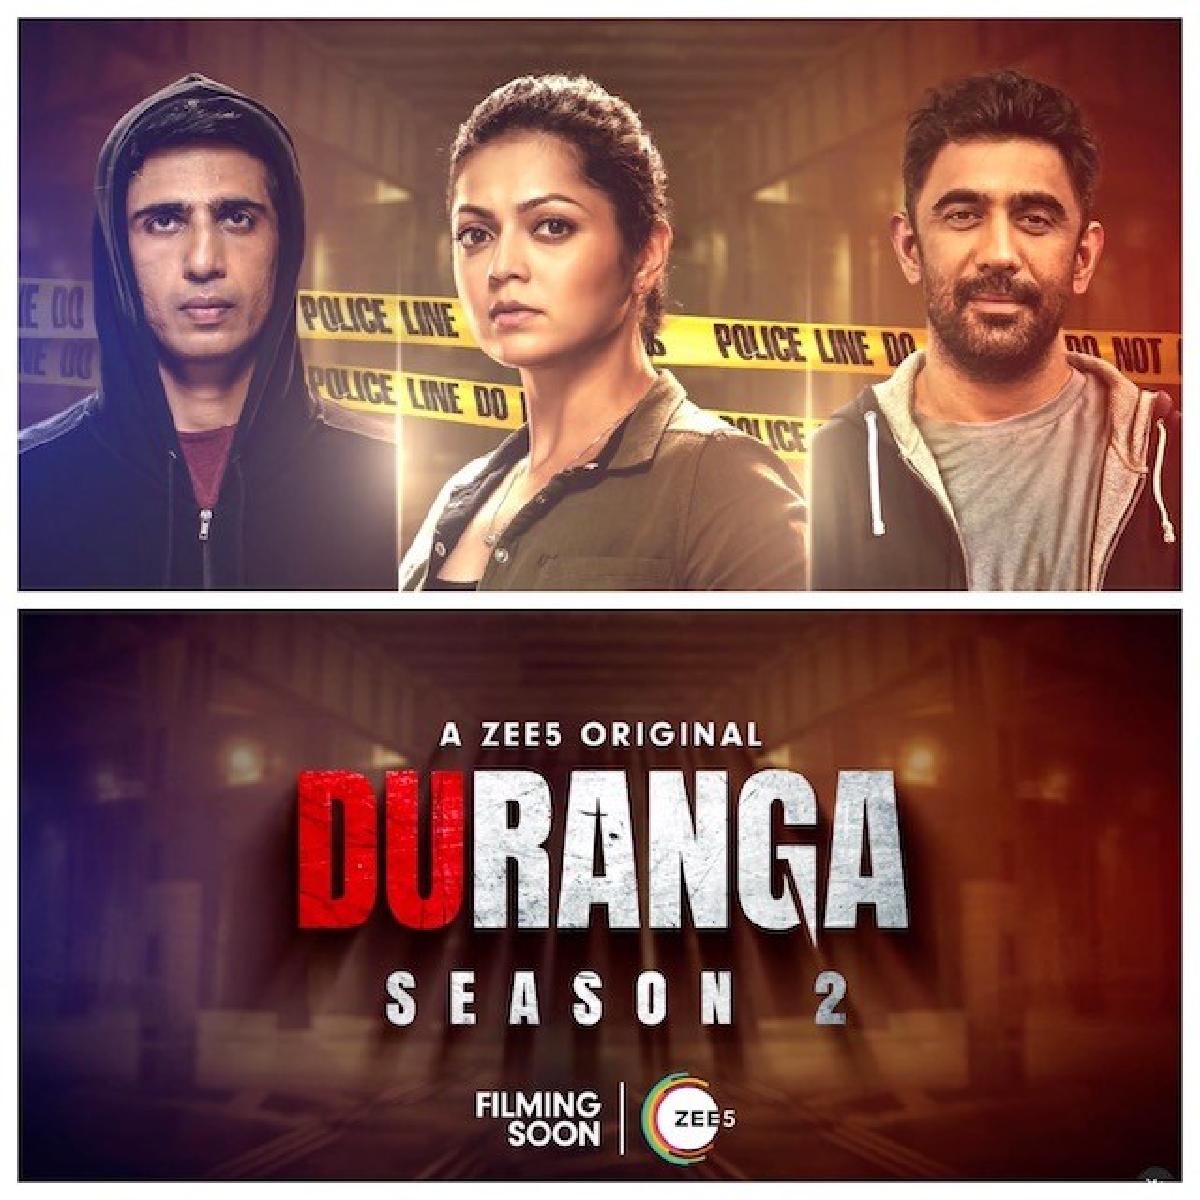 Duranga Season 2 Coming Soon, Starring Amit Sadh, Drashti Dhami and Gulshan Devaiah